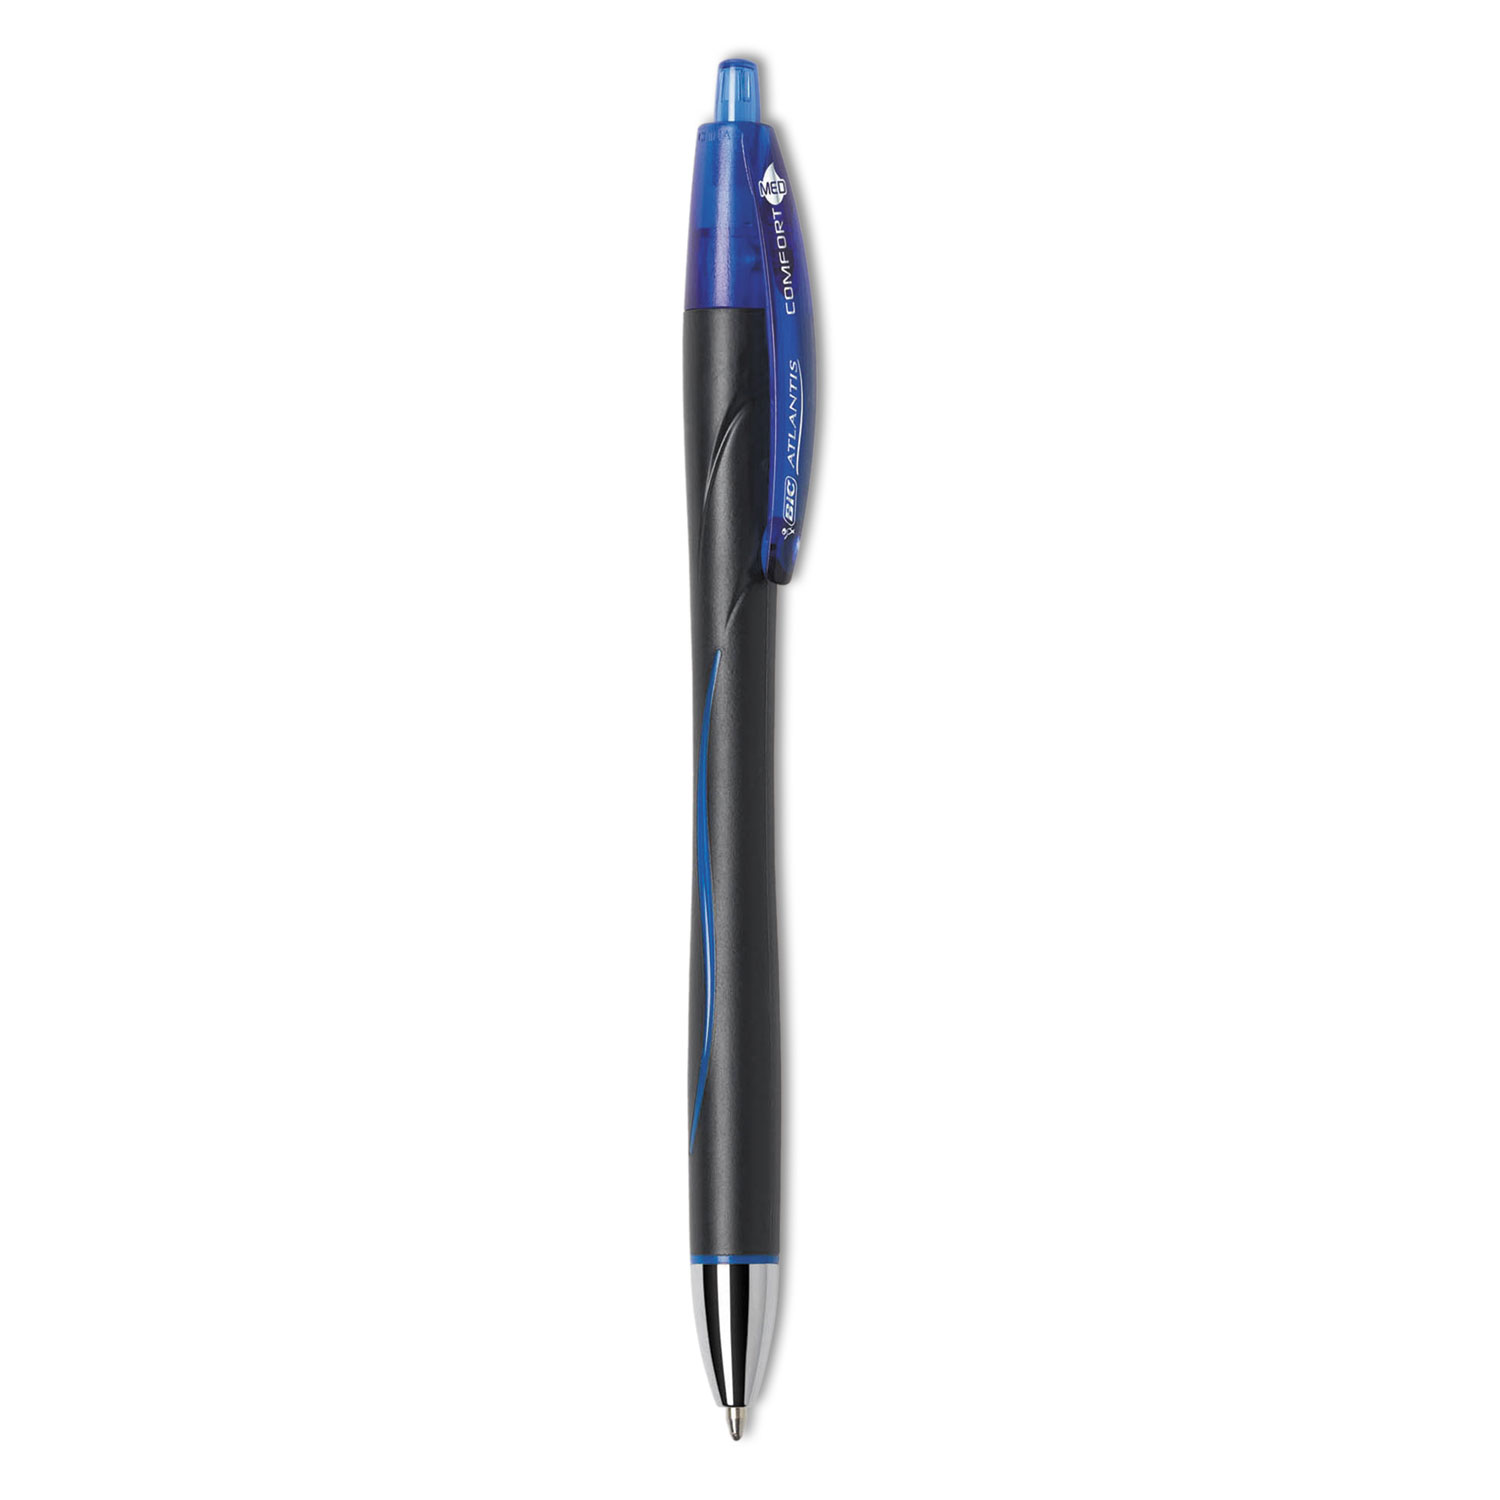  BIC VCGC11-BE Atlantis Comfort Retractable Ballpoint Pen, 1.2mm, Blue Ink/Barrel, Dozen (BICVCGC11BE) 